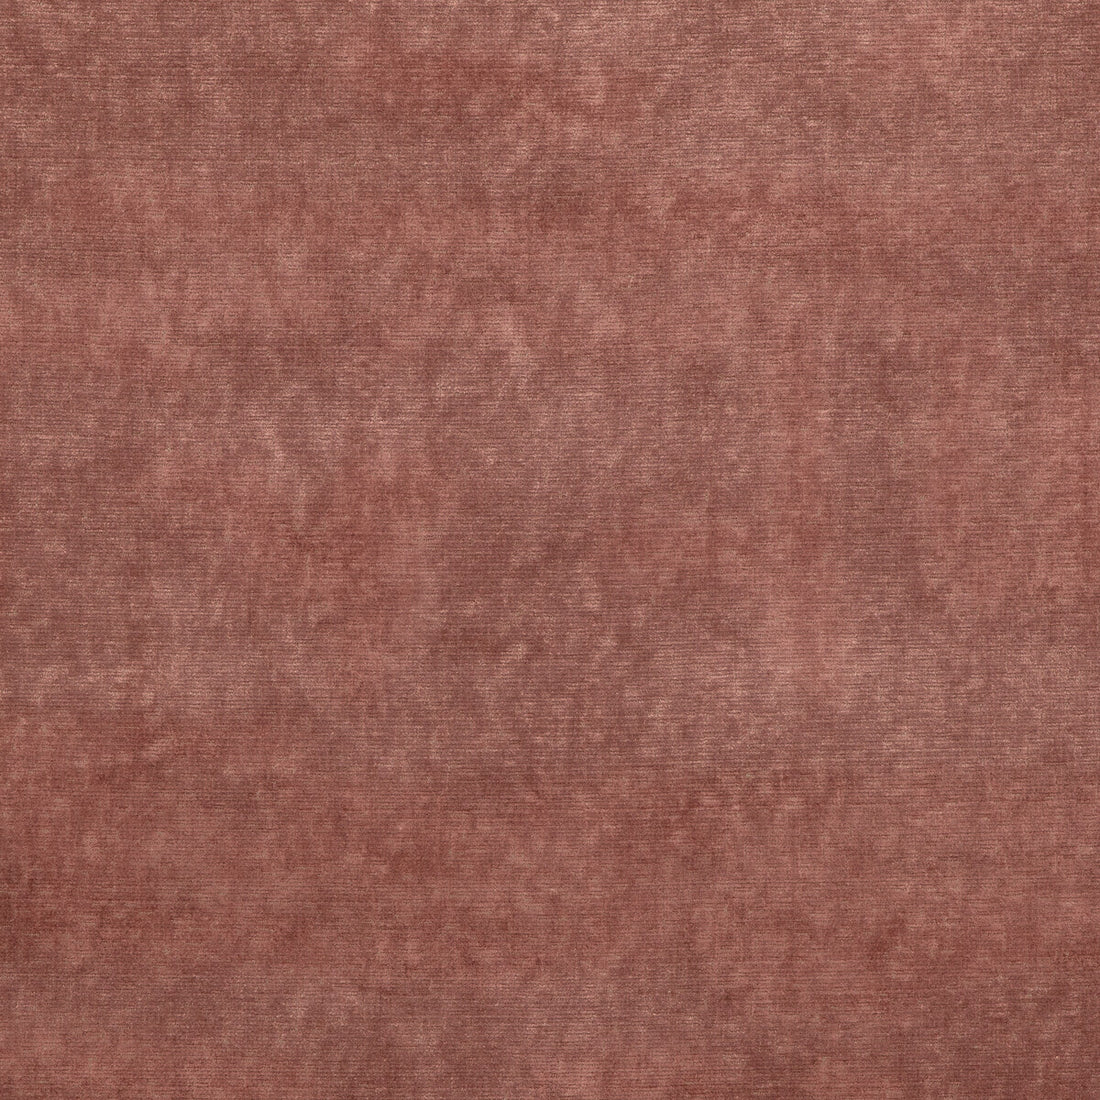 Alma Velvet fabric in blush color - pattern BF10827.440.0 - by G P &amp; J Baker in the Coromandel Velvets collection